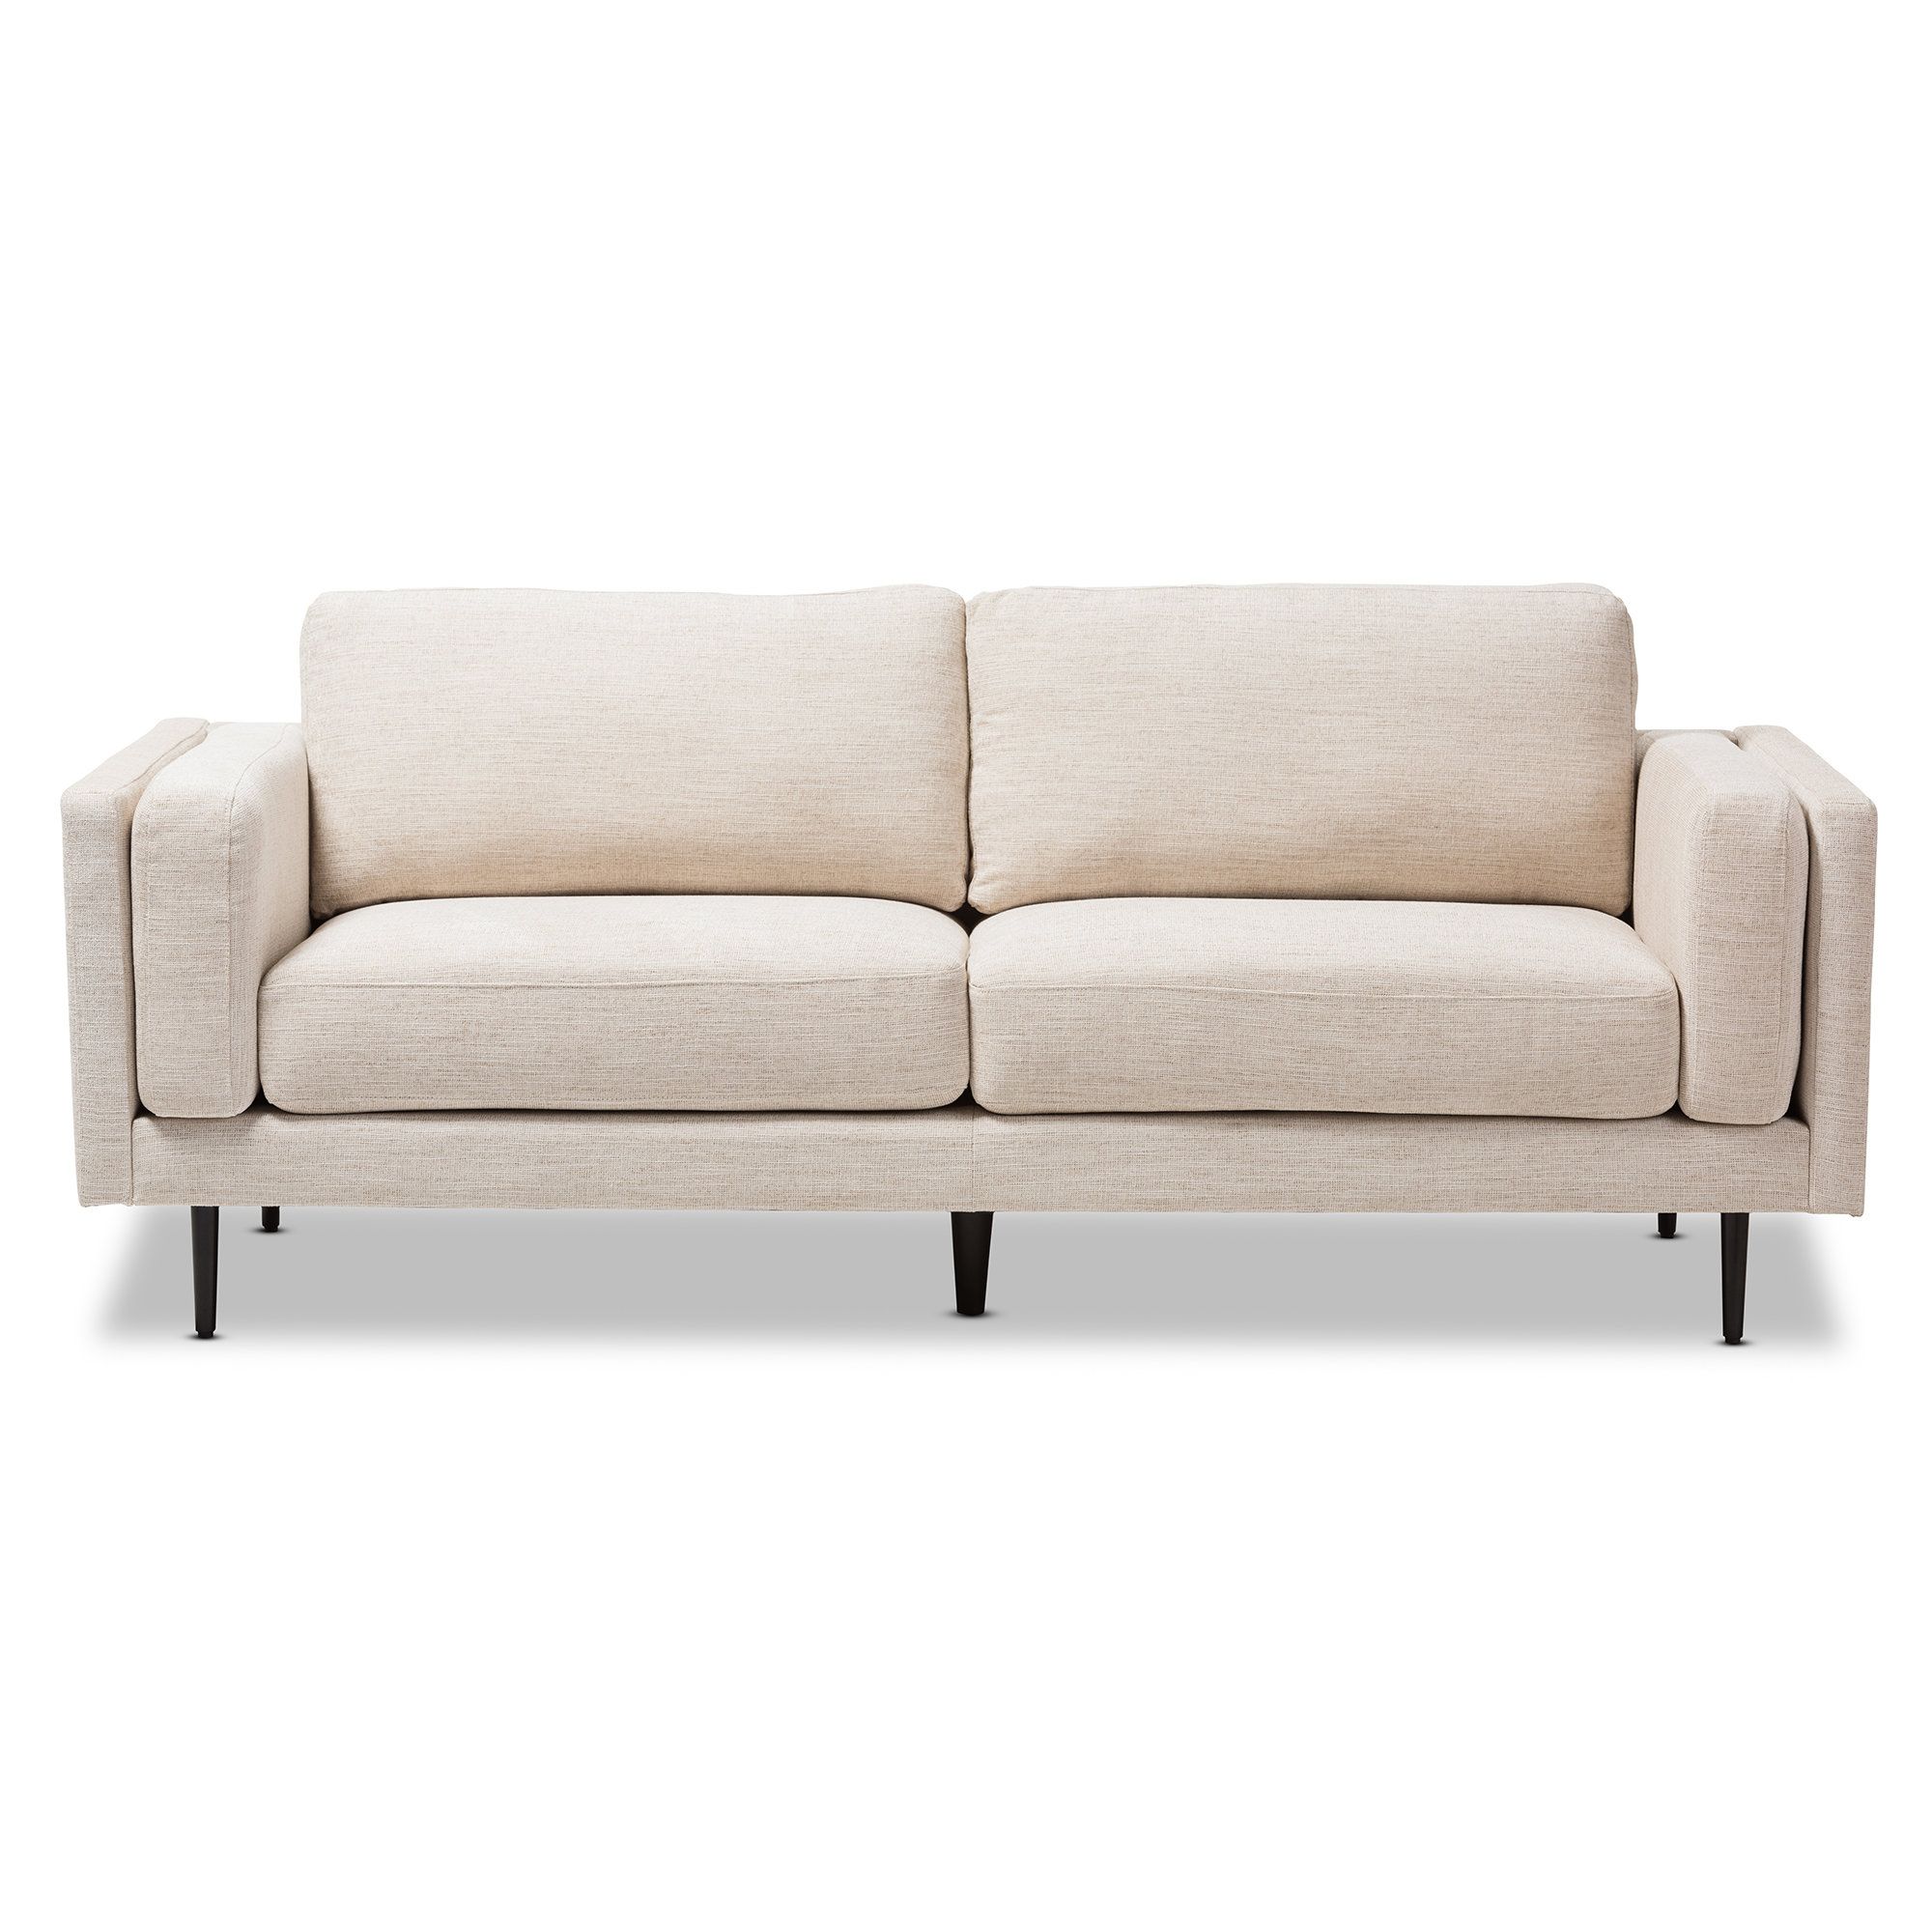 Langley Street Brennan Retro Mid Century Sofa | Wayfair Intended For Brennan Sofa Chairs (View 10 of 20)